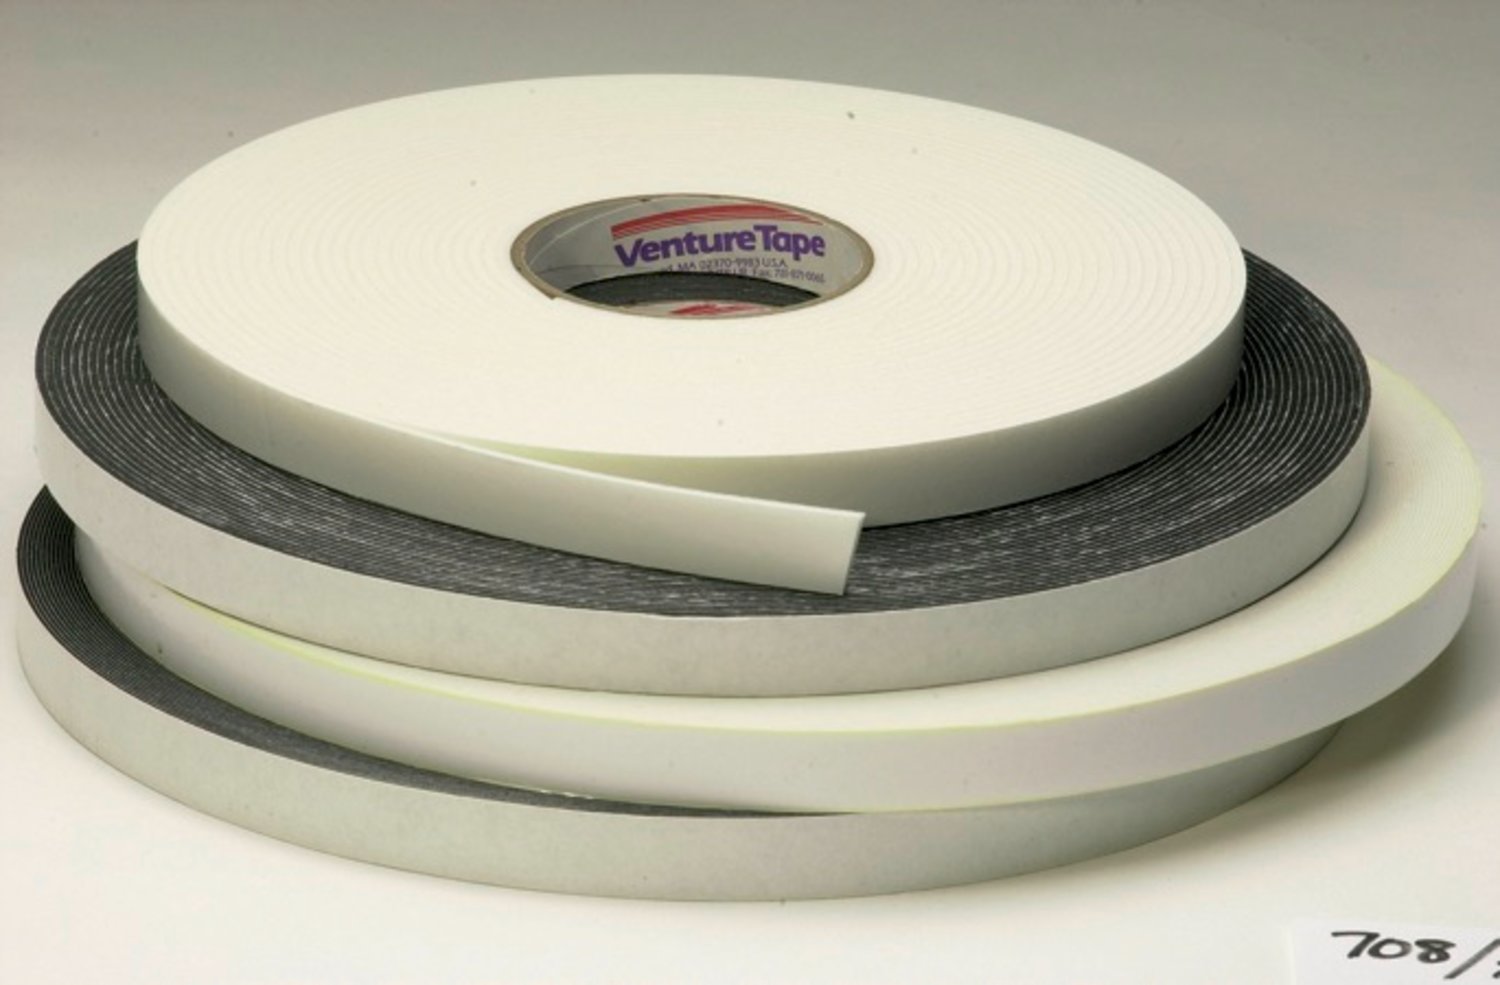 7100037018 - 3M Venture Tape Double Sided Polyethylene Foam Glazing Tape VG708,
Black, 1512 mm x 26 m, 3.2 mm, 1 roll per case